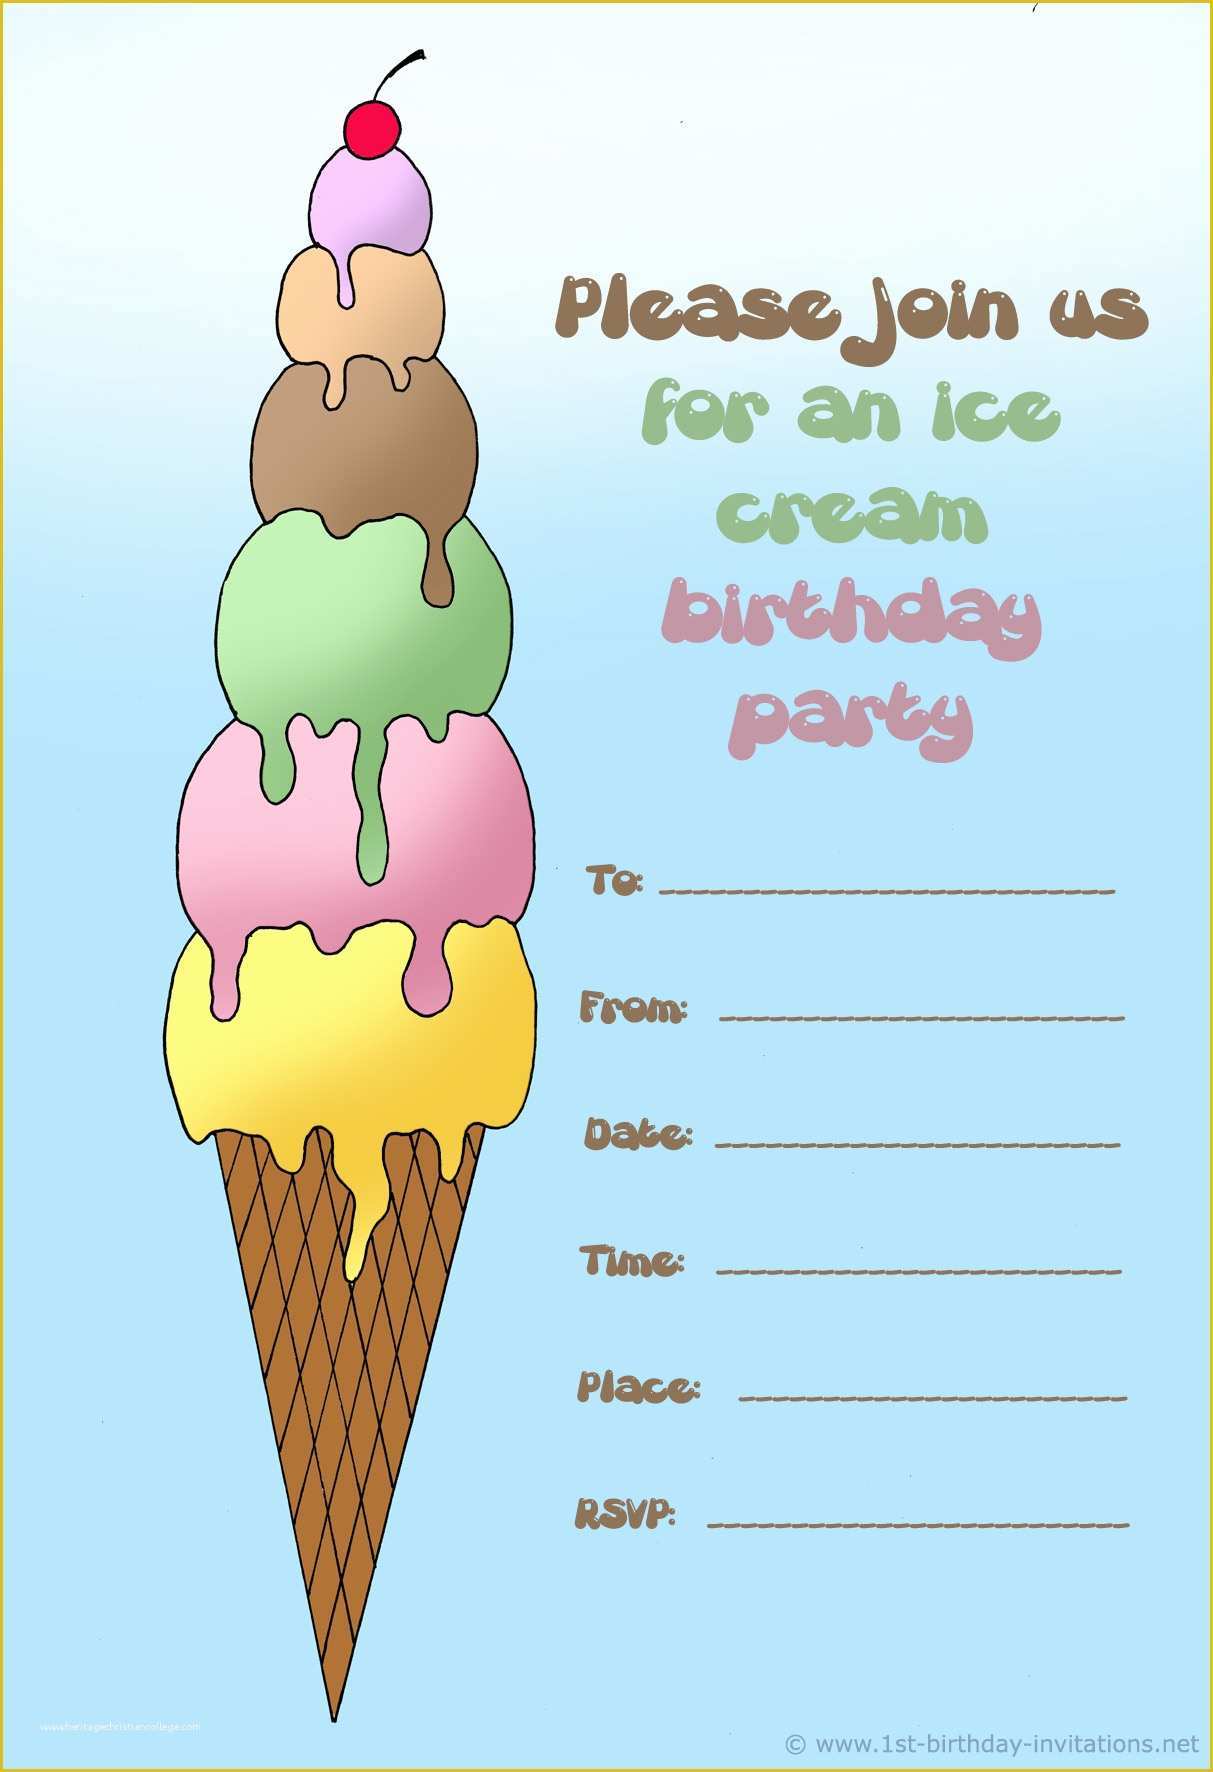 Ice Cream Birthday Invitation Template Free Of 14 Printable Birthday Invitations Many Fun themes